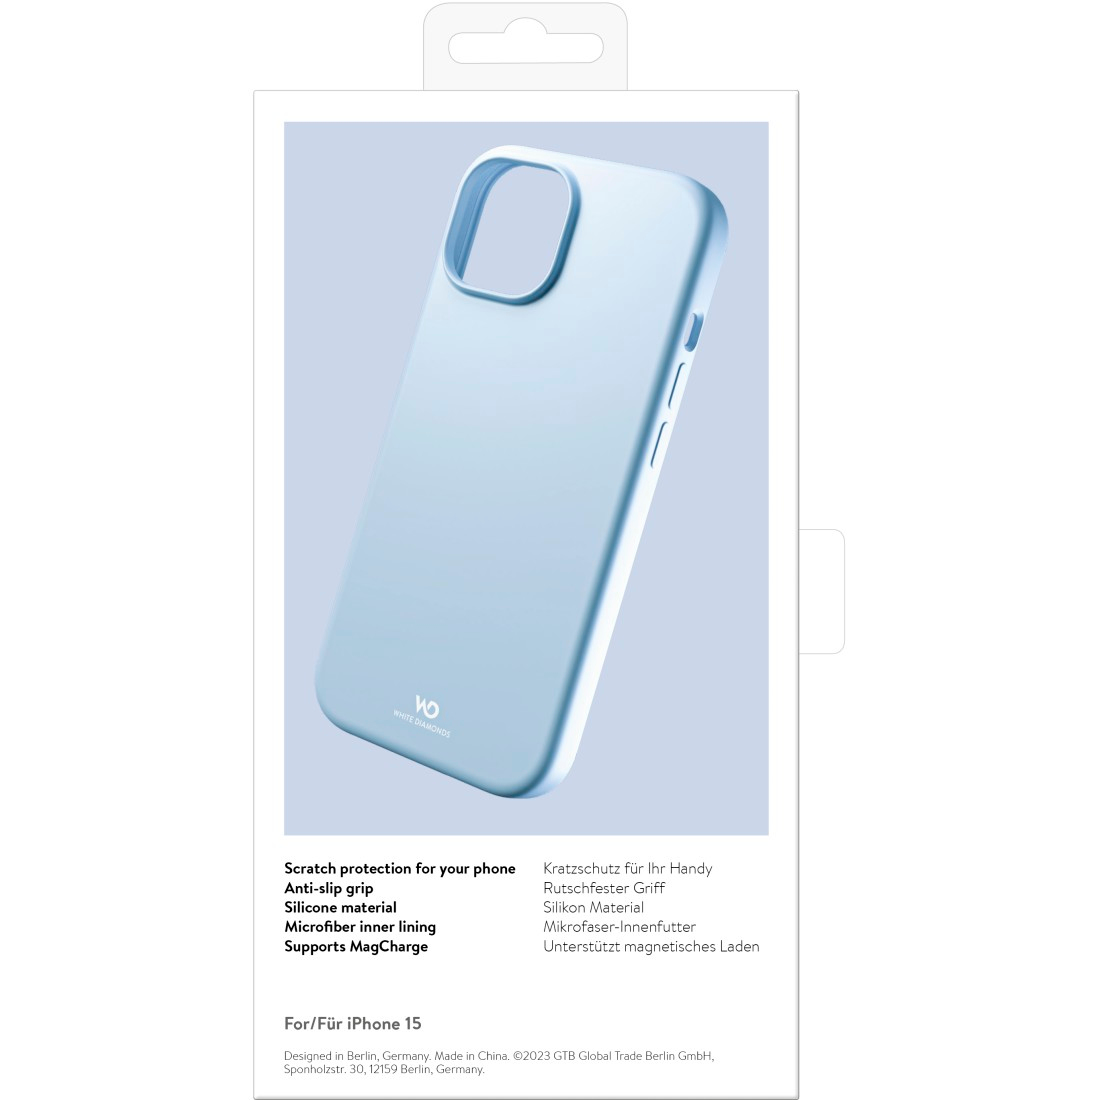 White Diamonds Mag Urban Case Cover voor Apple iPhone 15, Lichtblauw ,